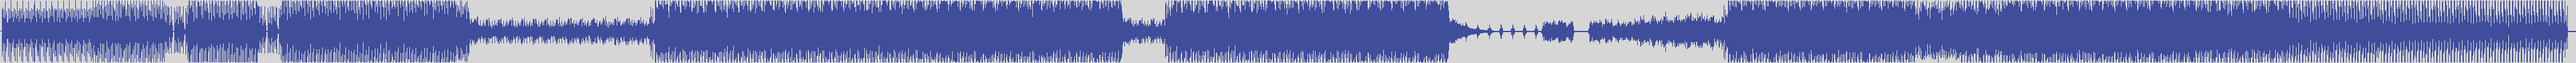 atomic_recordings [AR008] Fuzzy Hair - Move On [Pistakio Rmx] audio wave form